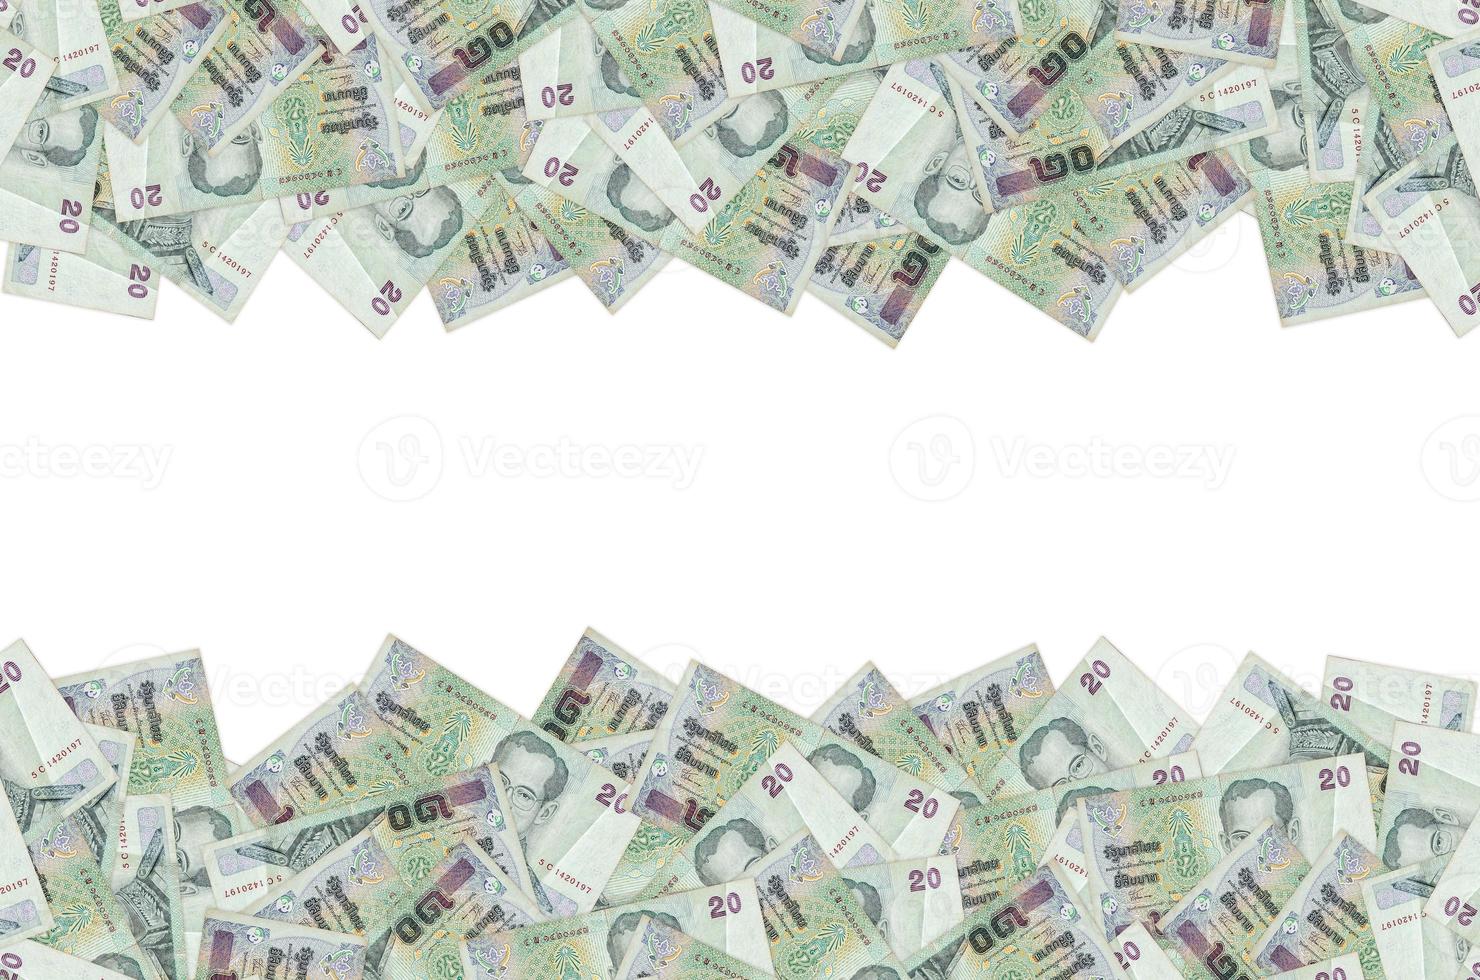 roi bhumibol adulyadej sur 20 baht thailand money bill close up photo